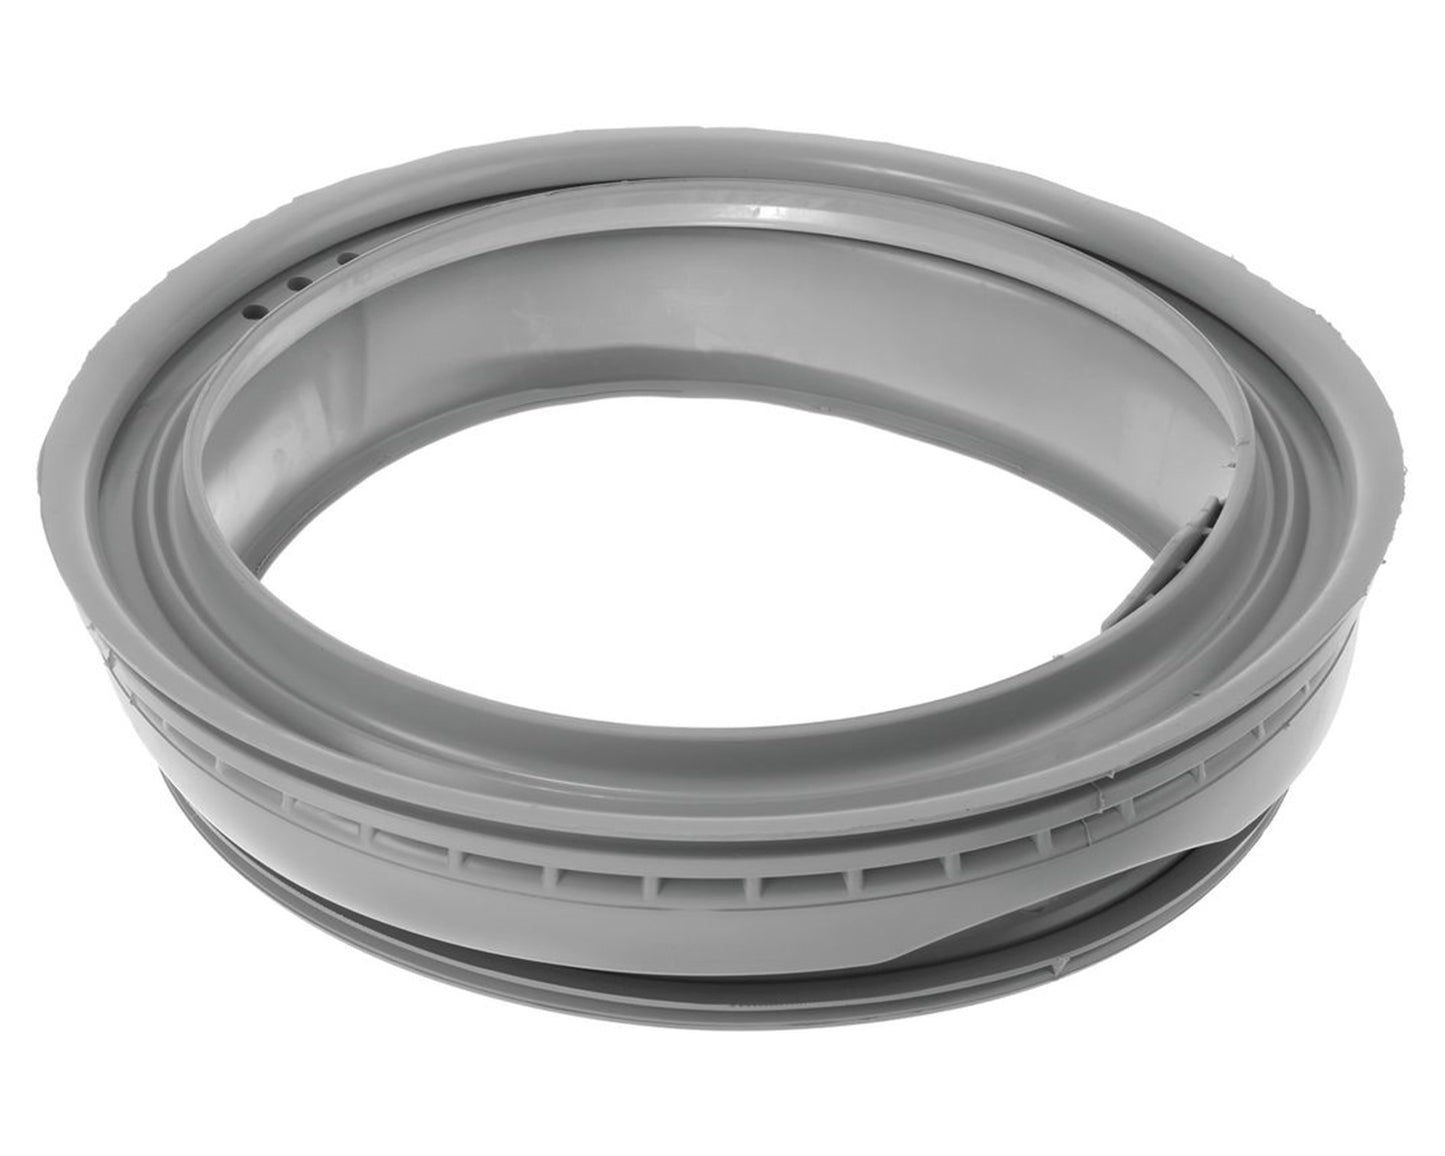 Washing Machine Rubber Door Gasket Seal for Bosch Siemens Esclusiv Extraclasse Avantgarde - 354135, 00354135, 00362254, 00706276